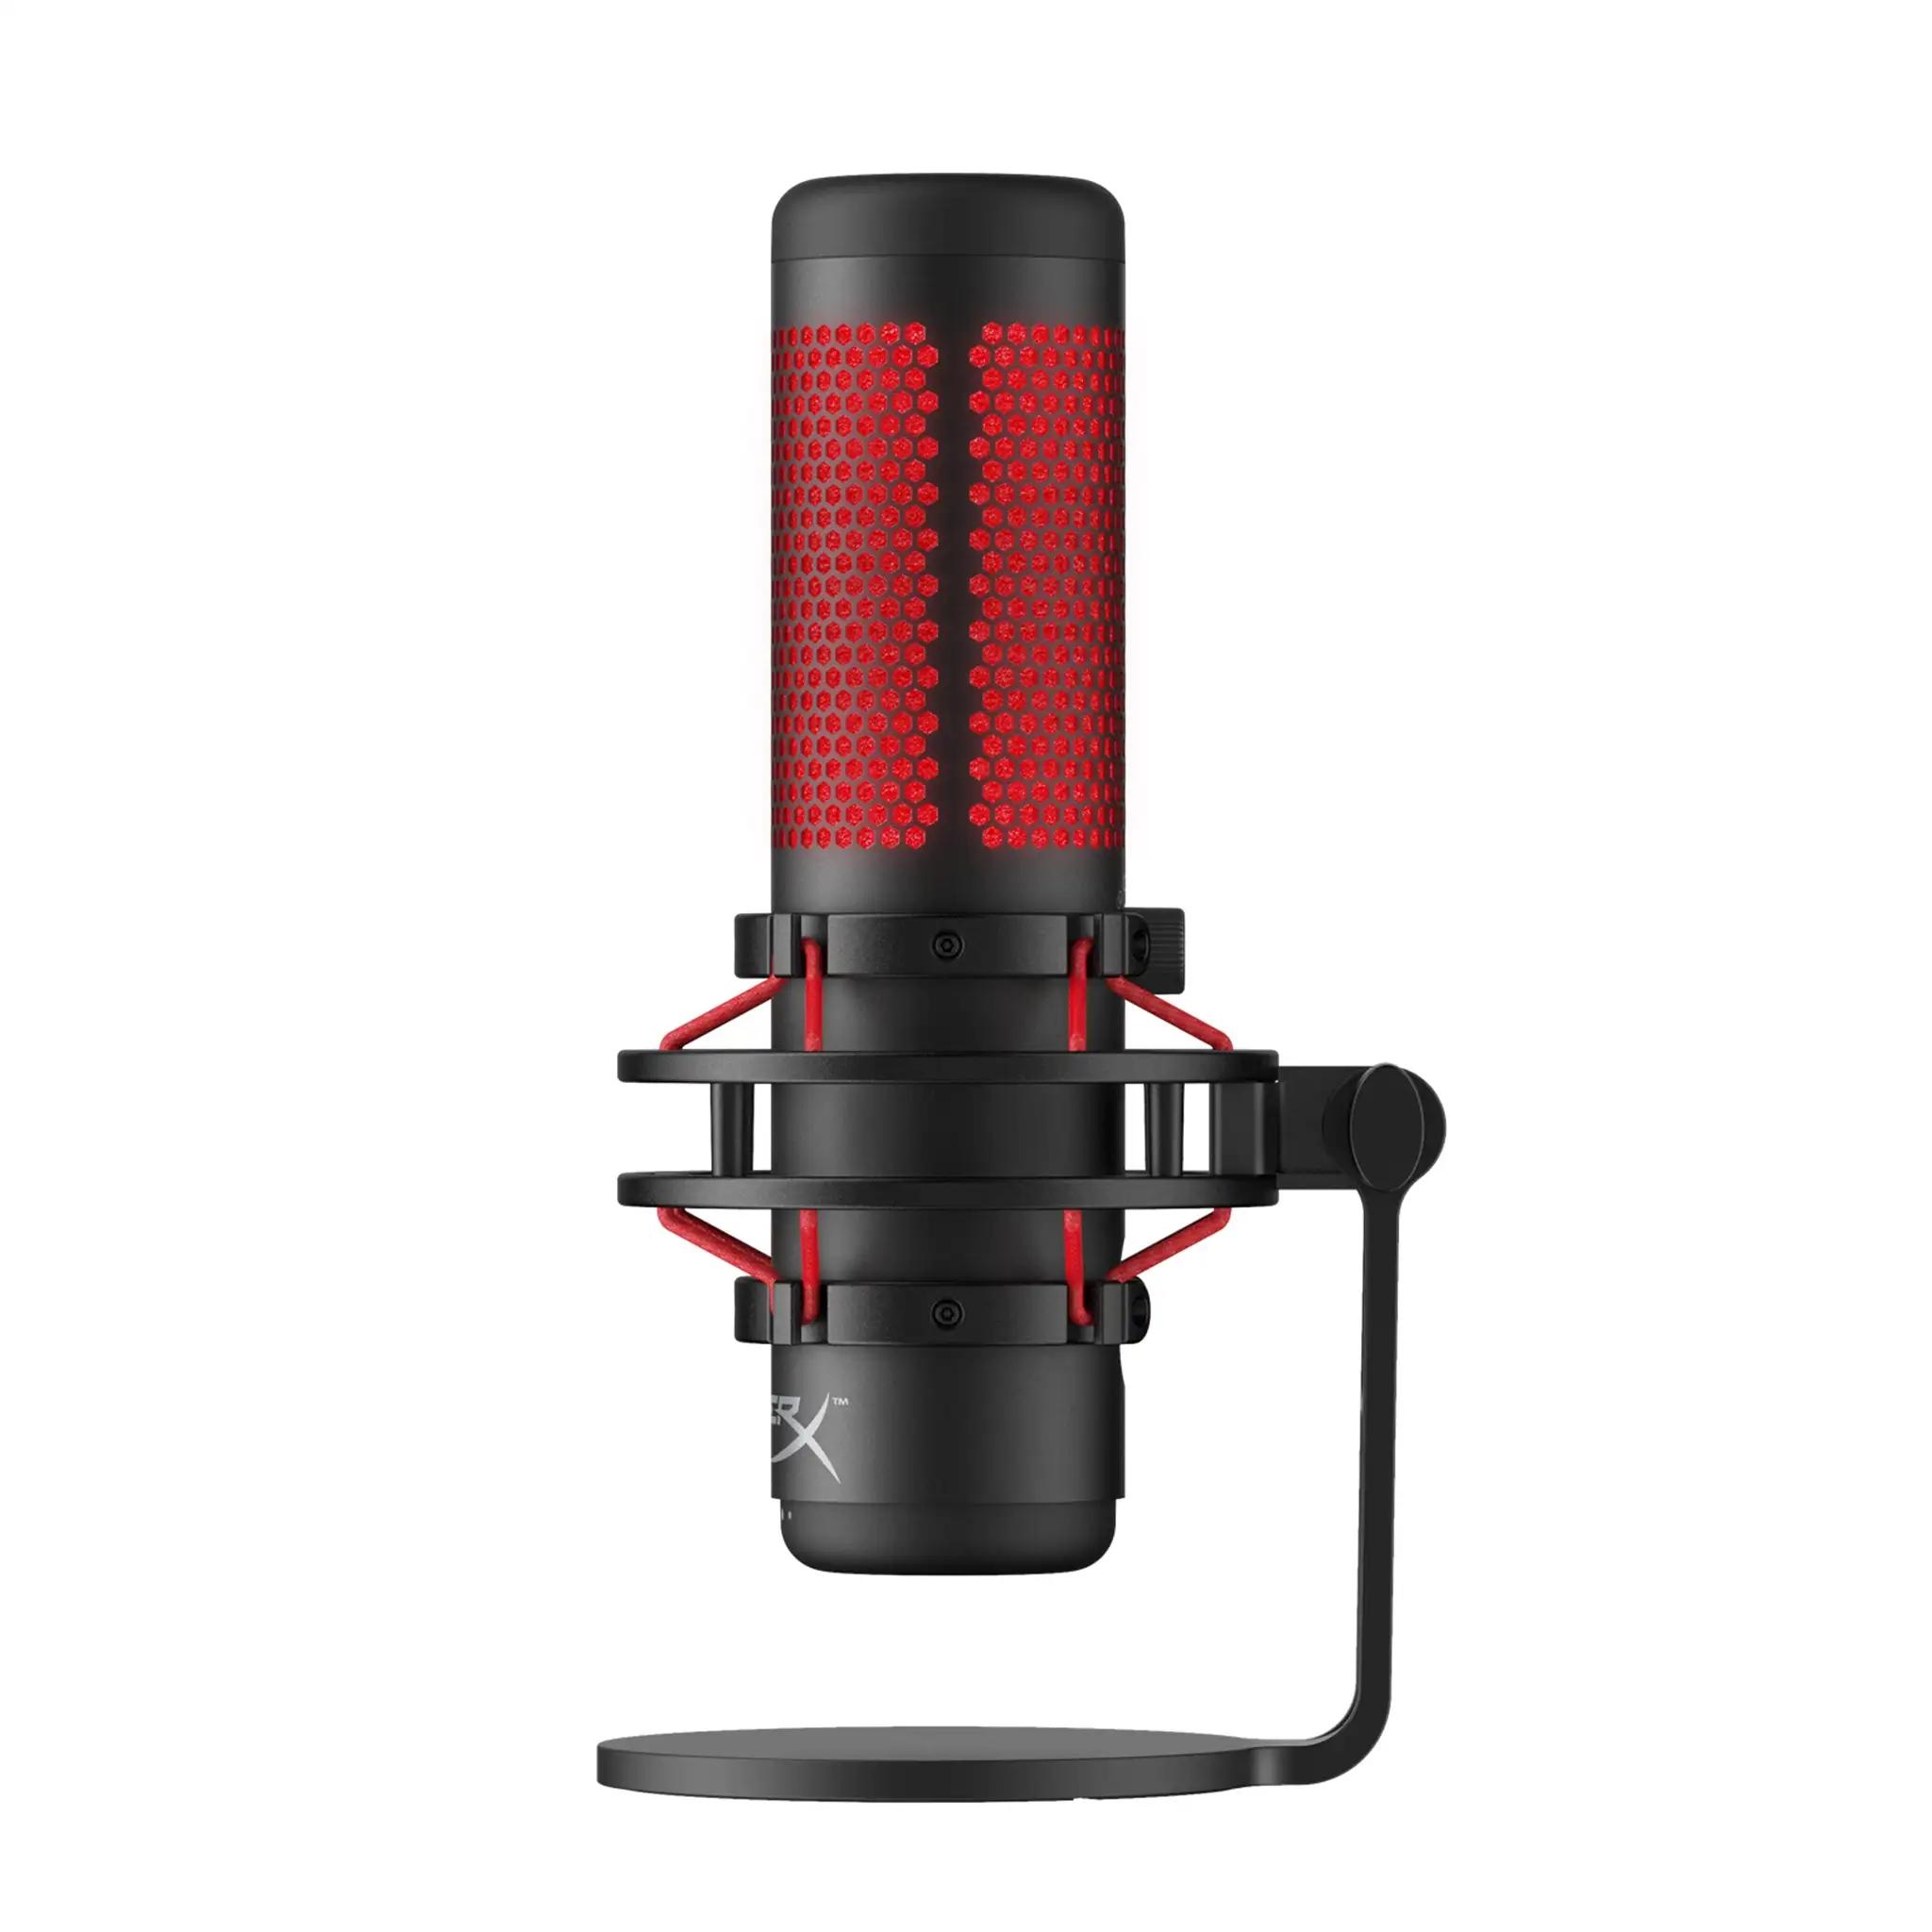 Микрофон для стрима HYPERX QuadCast Black (4P5P6AA)